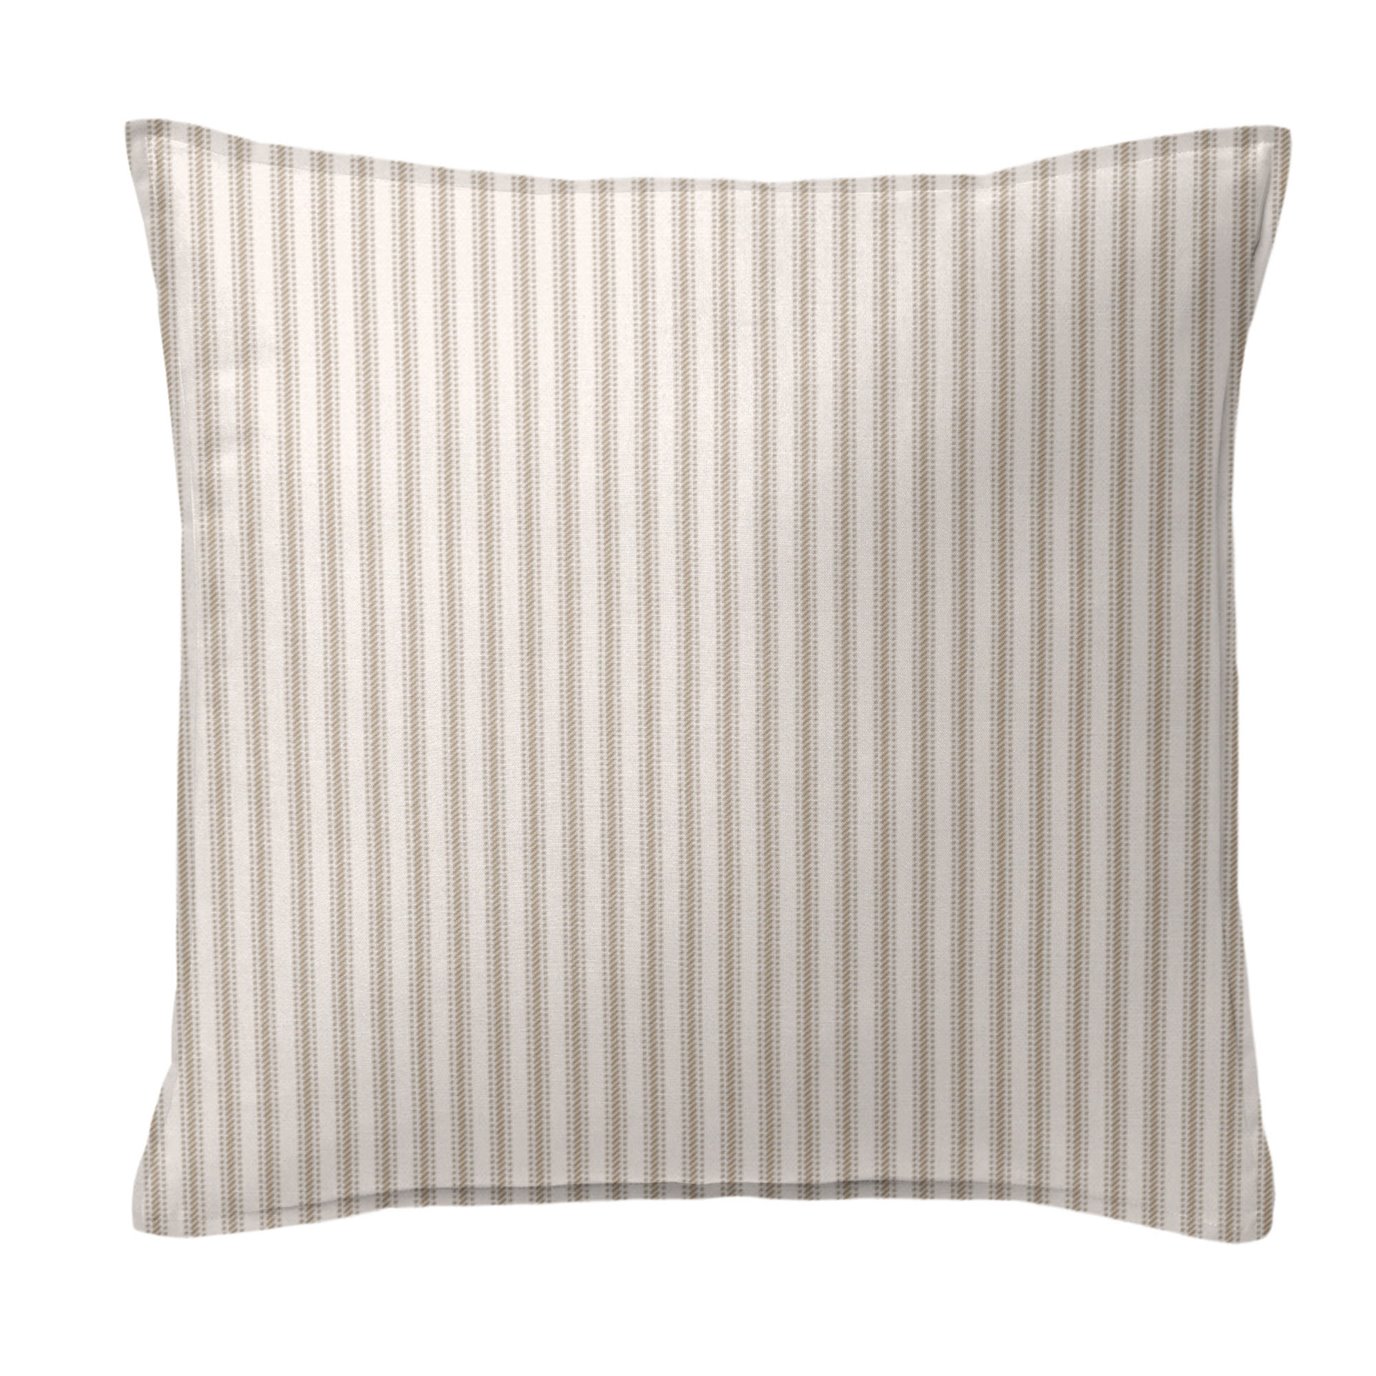 Cruz Ticking Stripes Taupe/Ivory Decorative Pillow - Size 20" Square